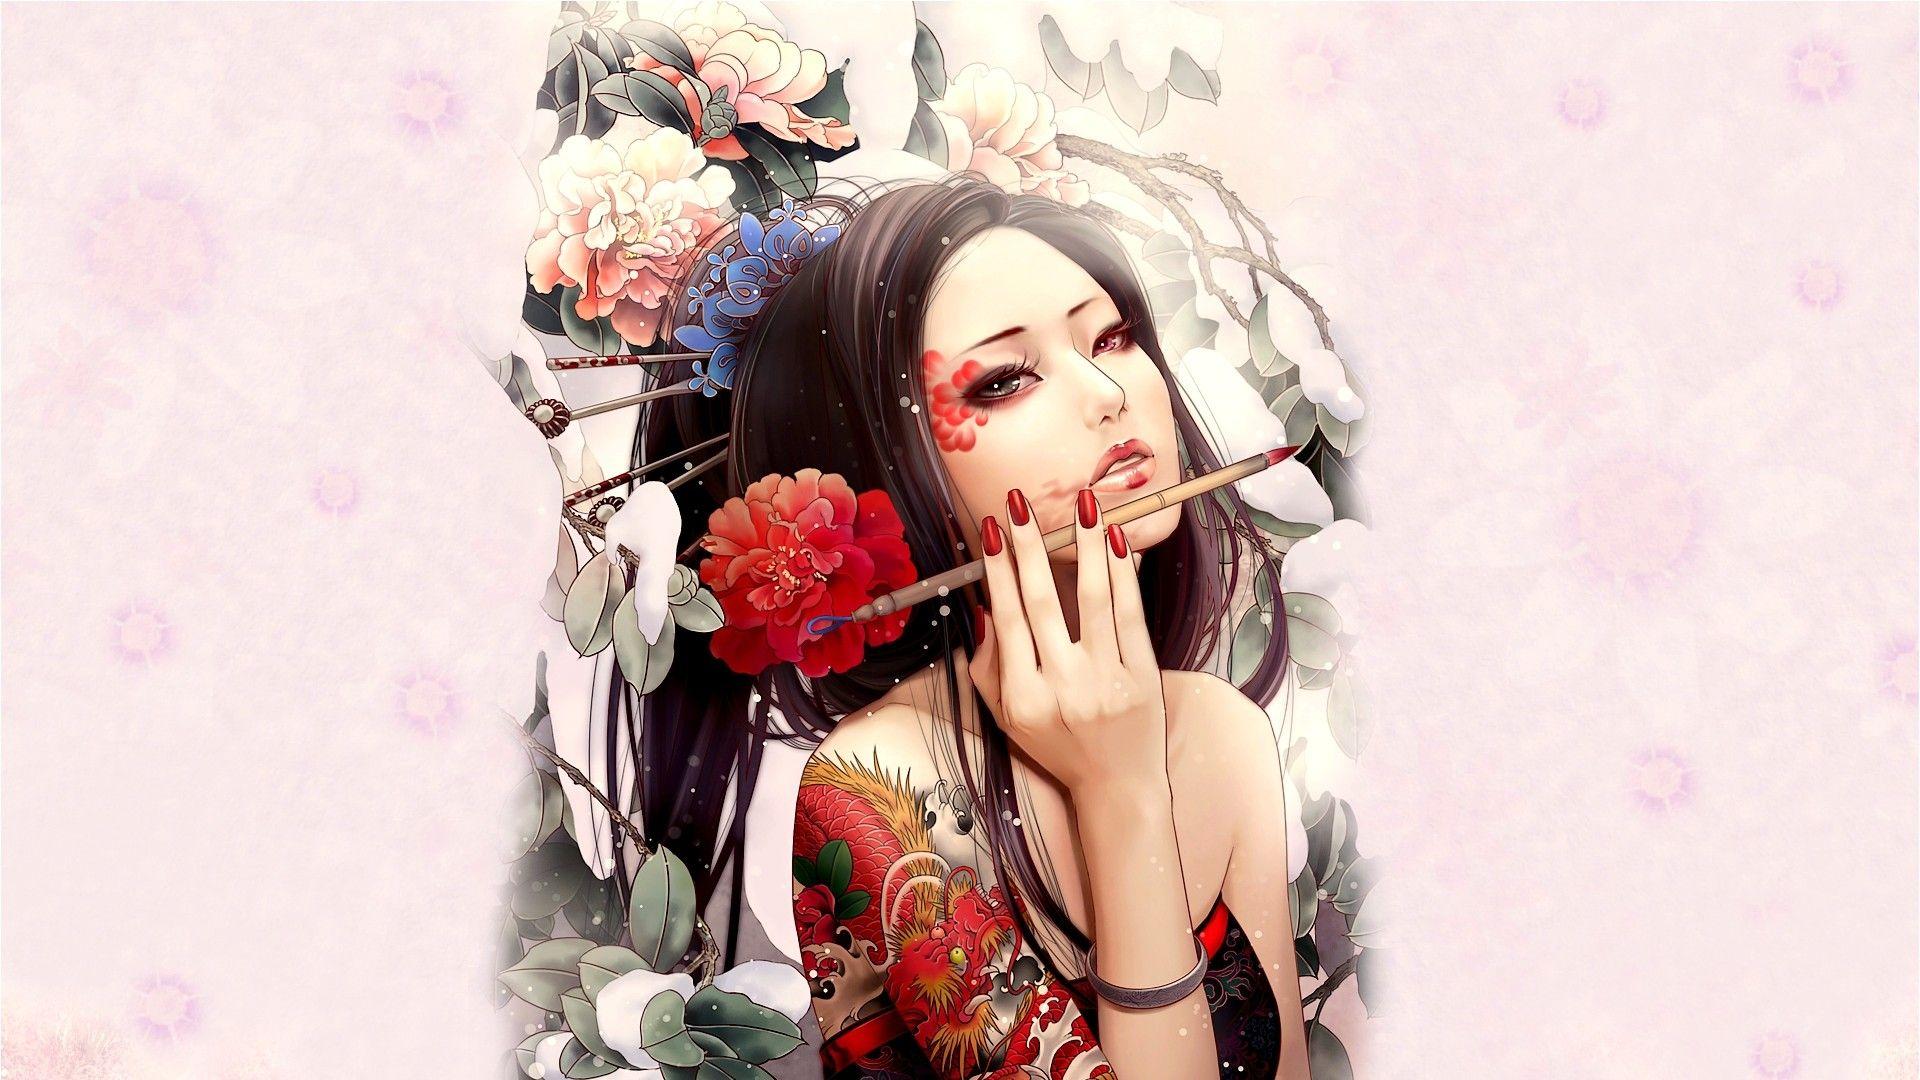 OWL, IPHONE WALLPAPER BACKGROUND IPHONE WALLPAPER / BACKGROUNDS 1280×1024 Wallpaper Of Tattoo (35 Wallpaper). Adorable Wa. Geisha art, Japanese art, Japan art